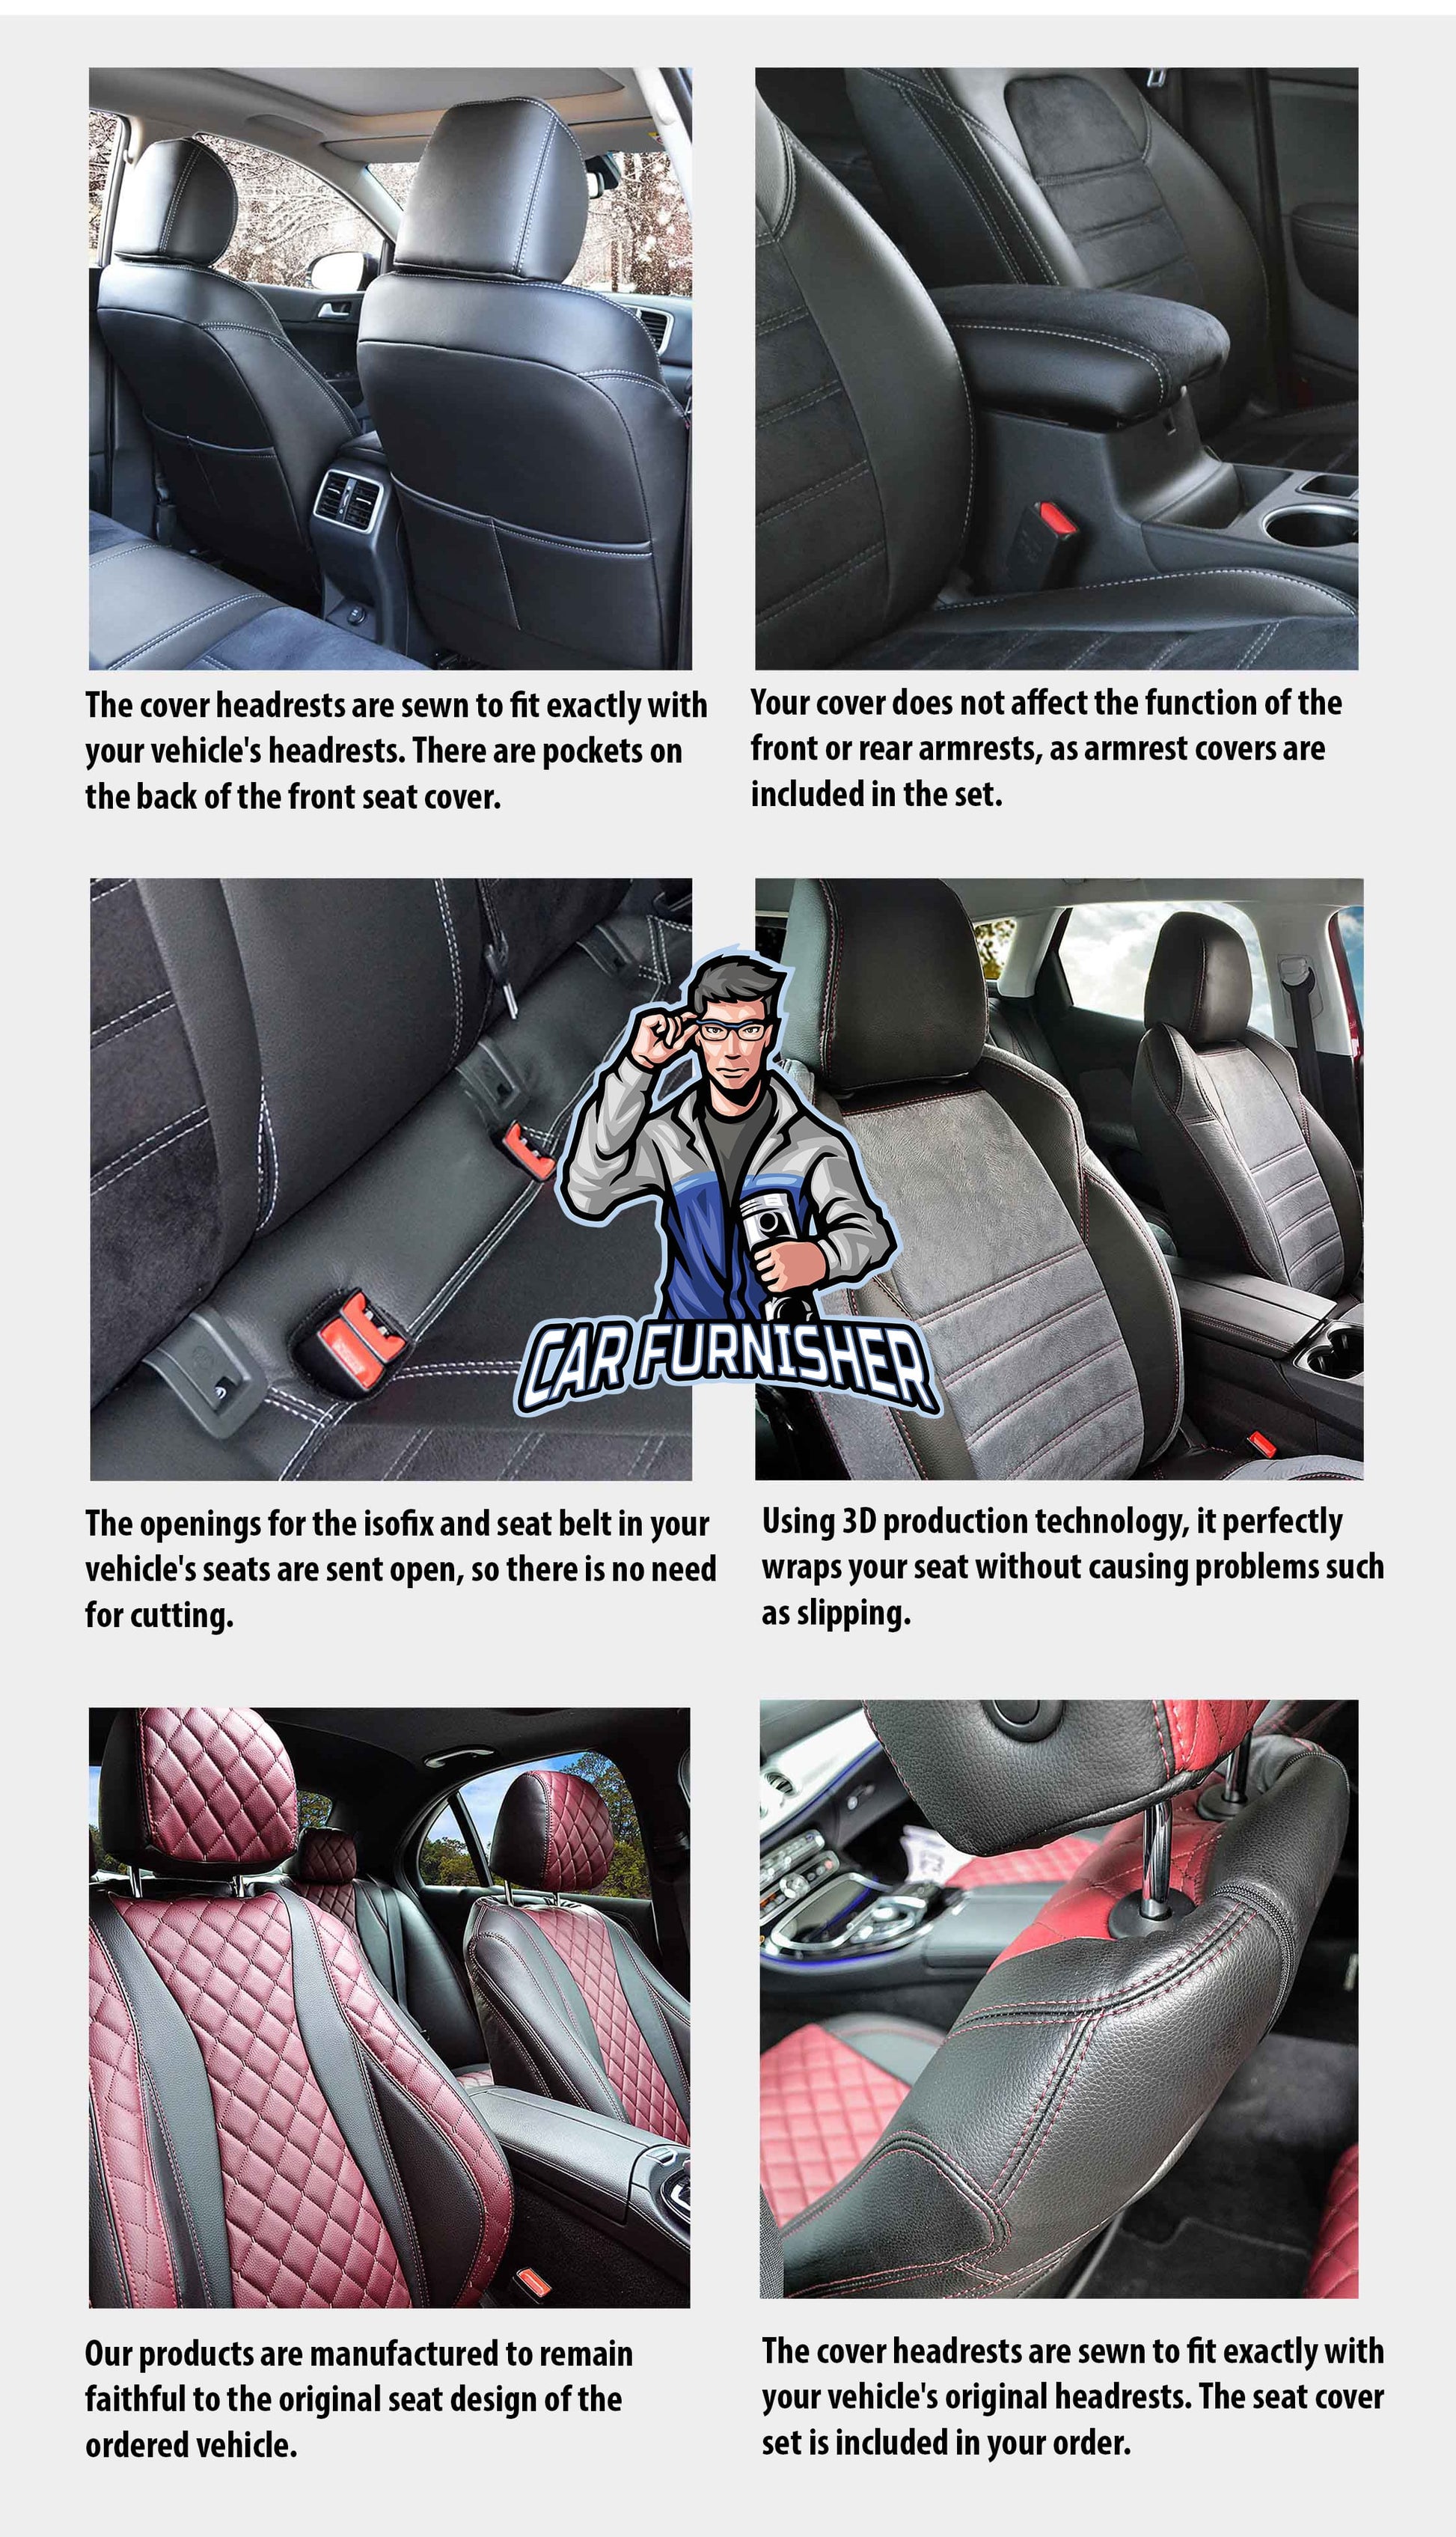 Suzuki S-Cross Car Seat Covers 2013-2018 Tokyo Design Beige Leather